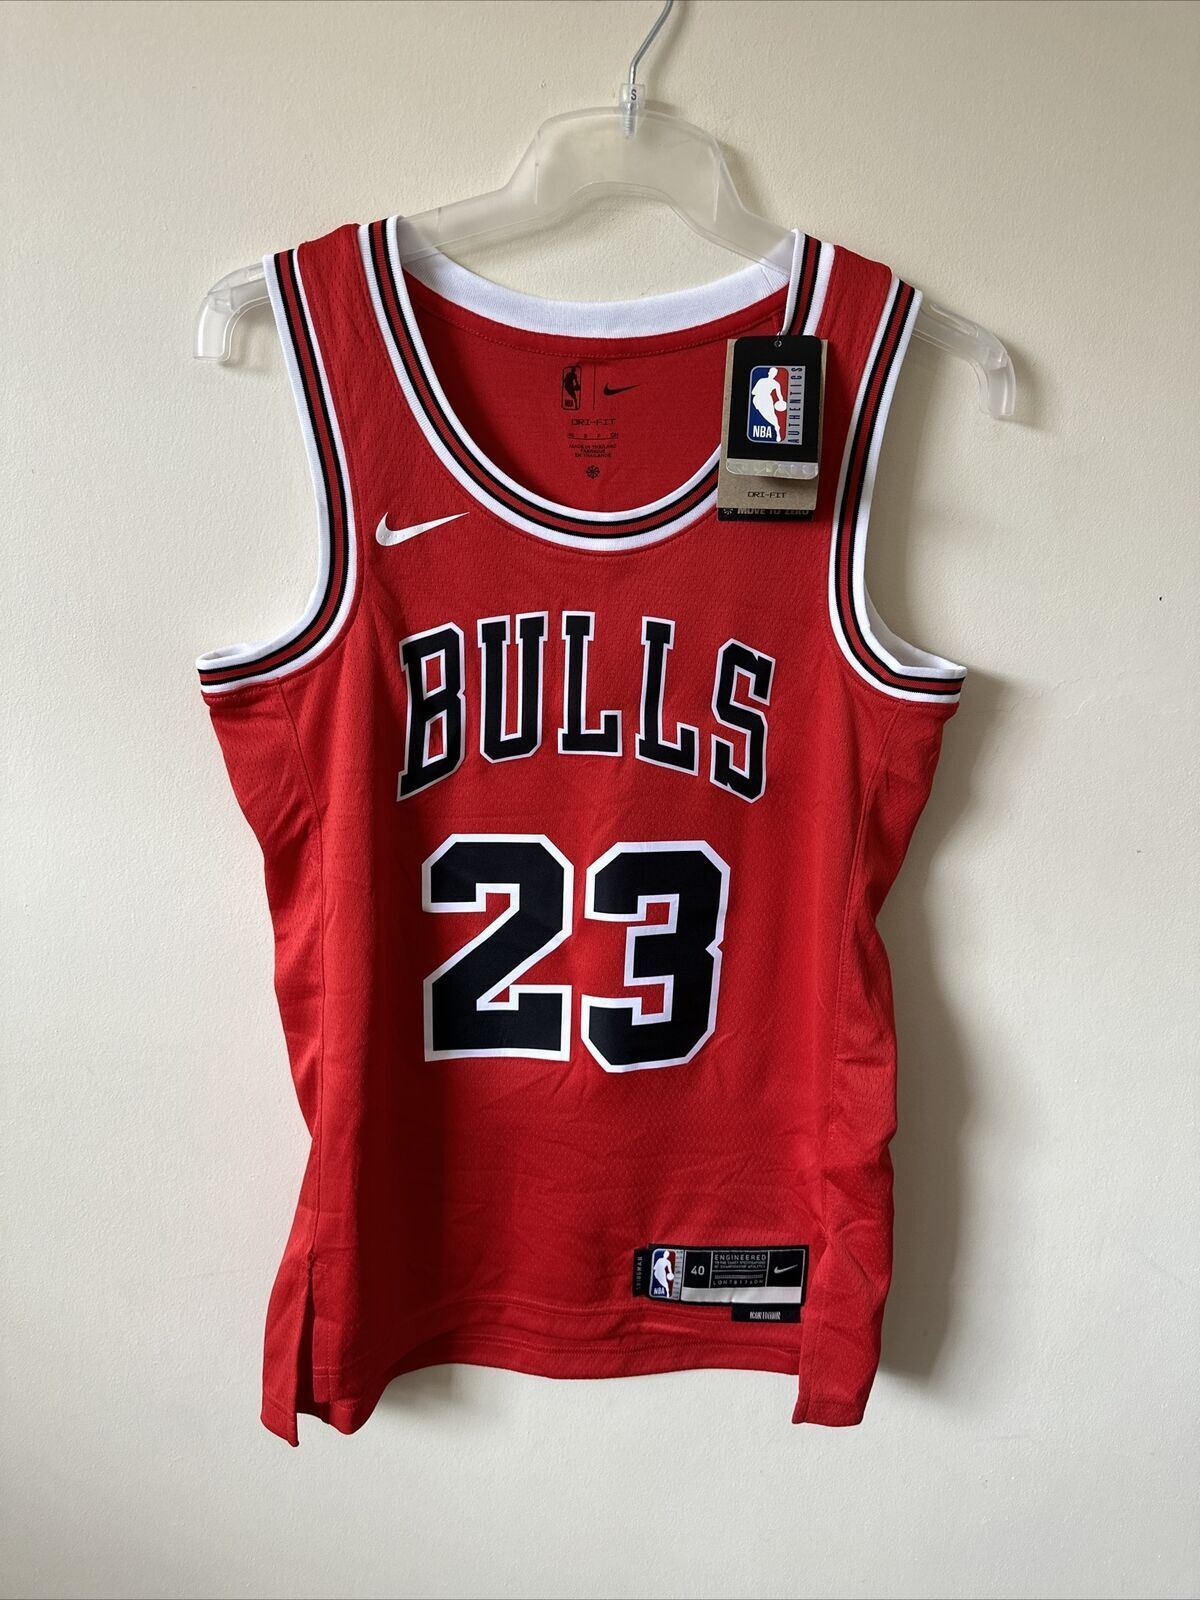 Nike NBA Chicago Bulls Icon Edition Jersey ALI 23 Basketball Mens Small